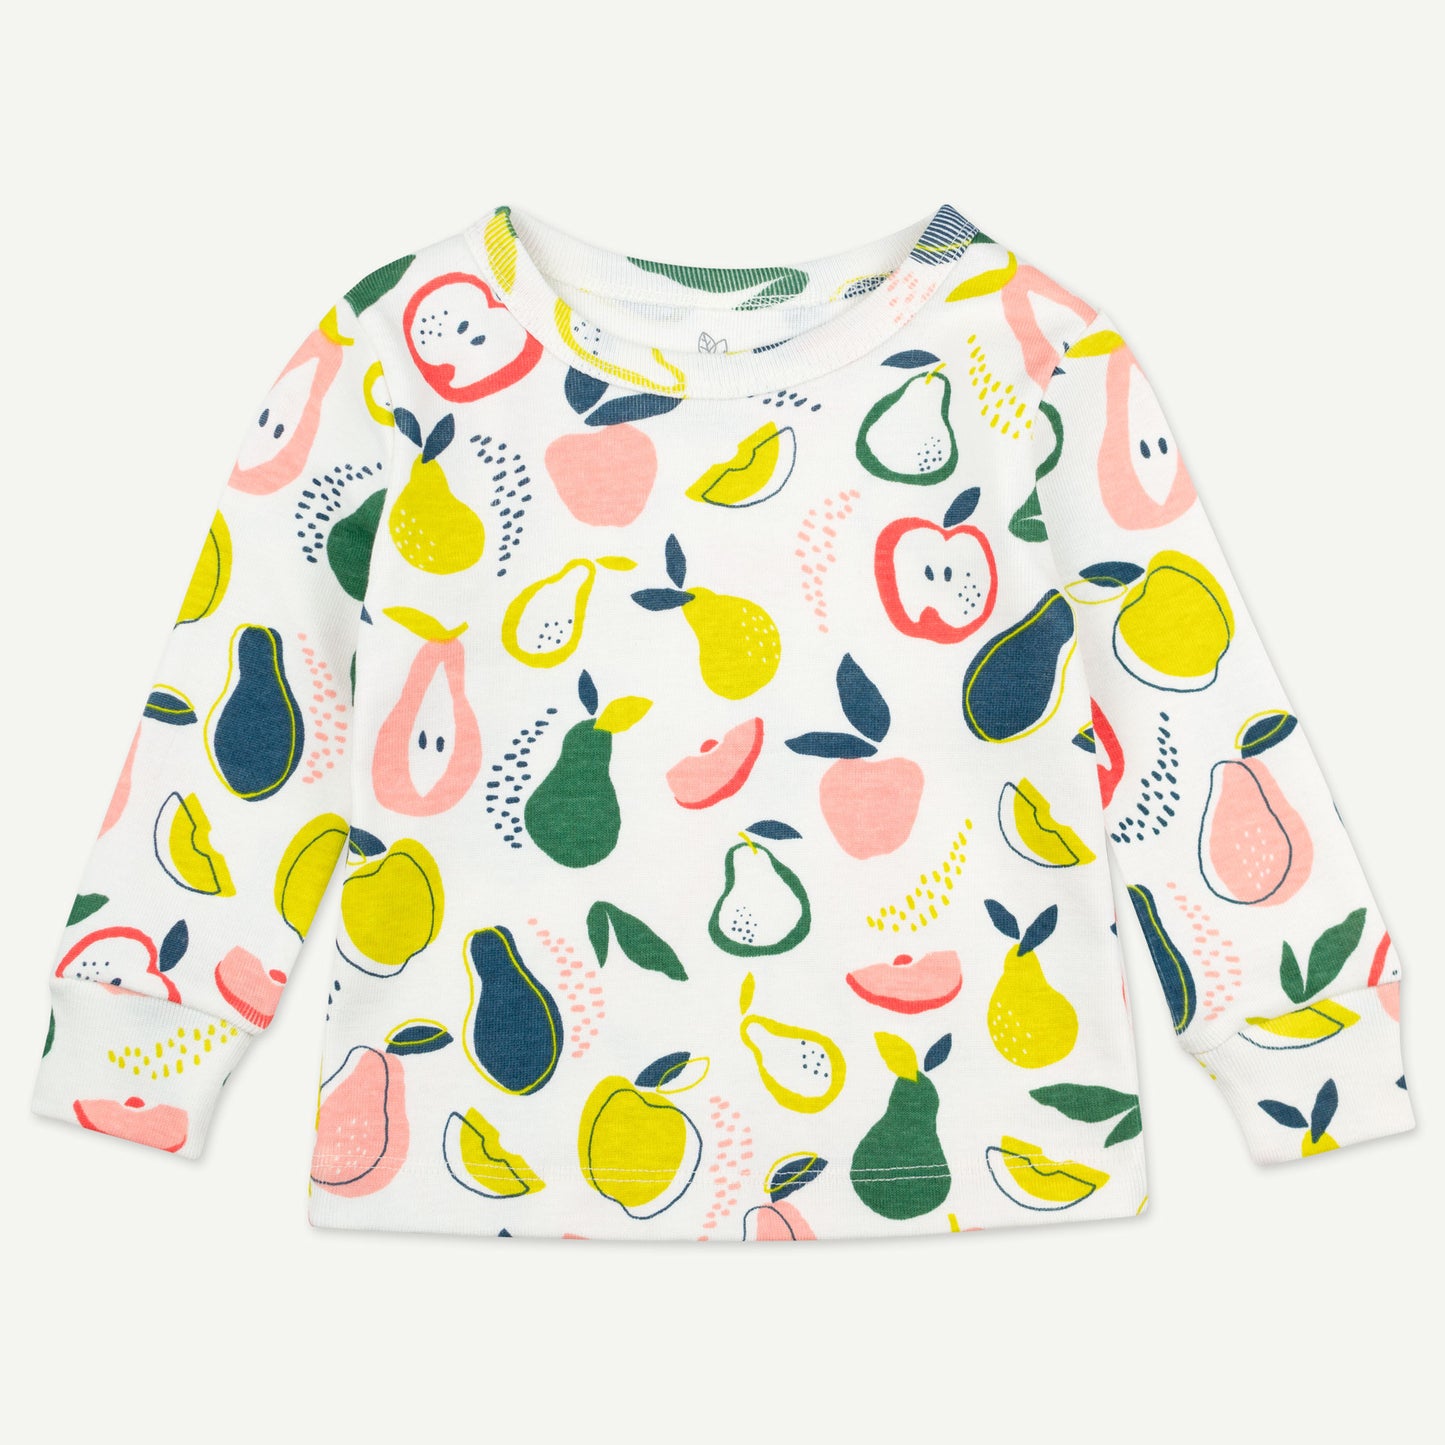 2-Piece Pajama in Fruit Print - Toddler